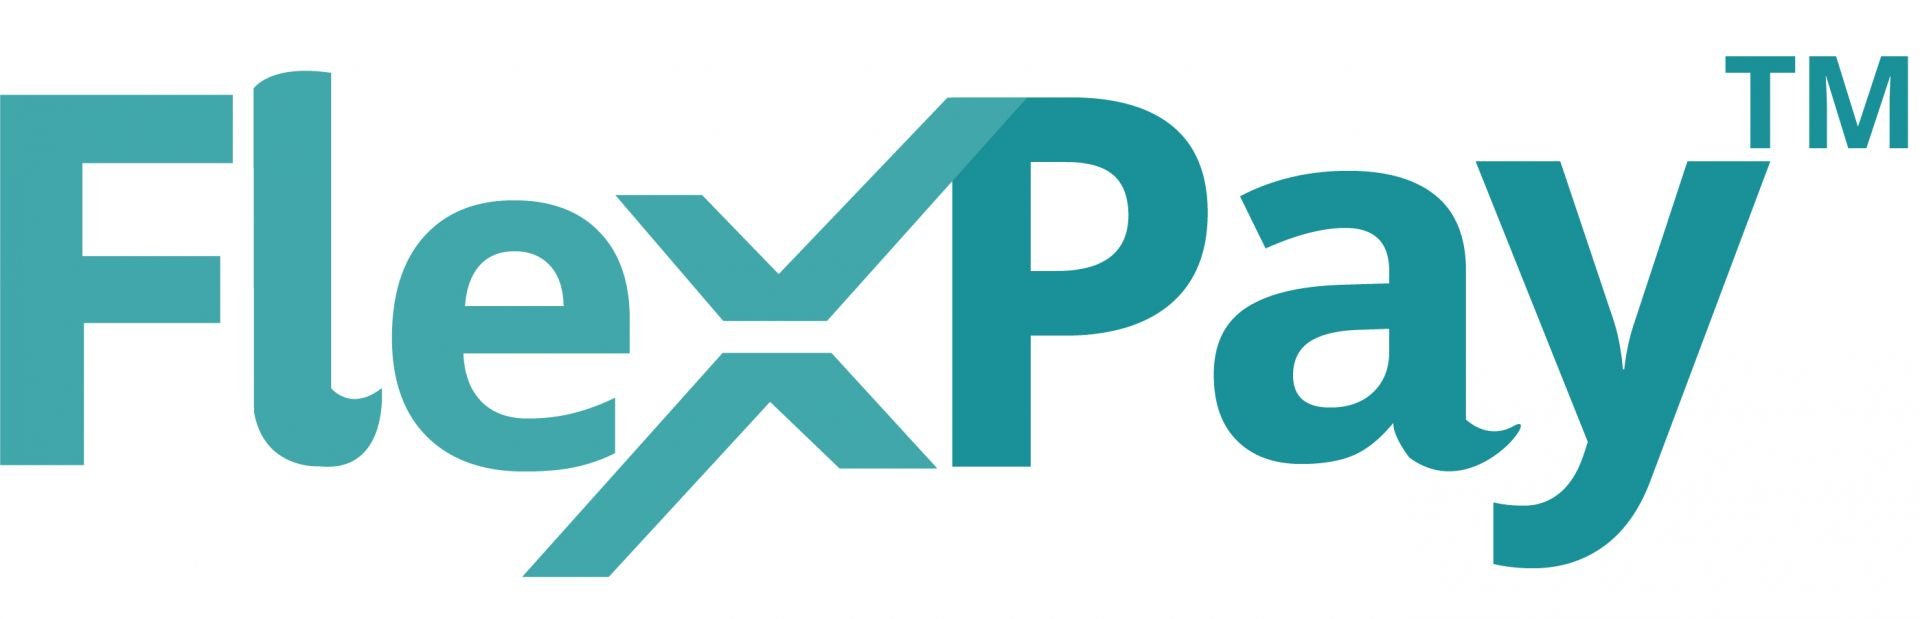 flexpay logo